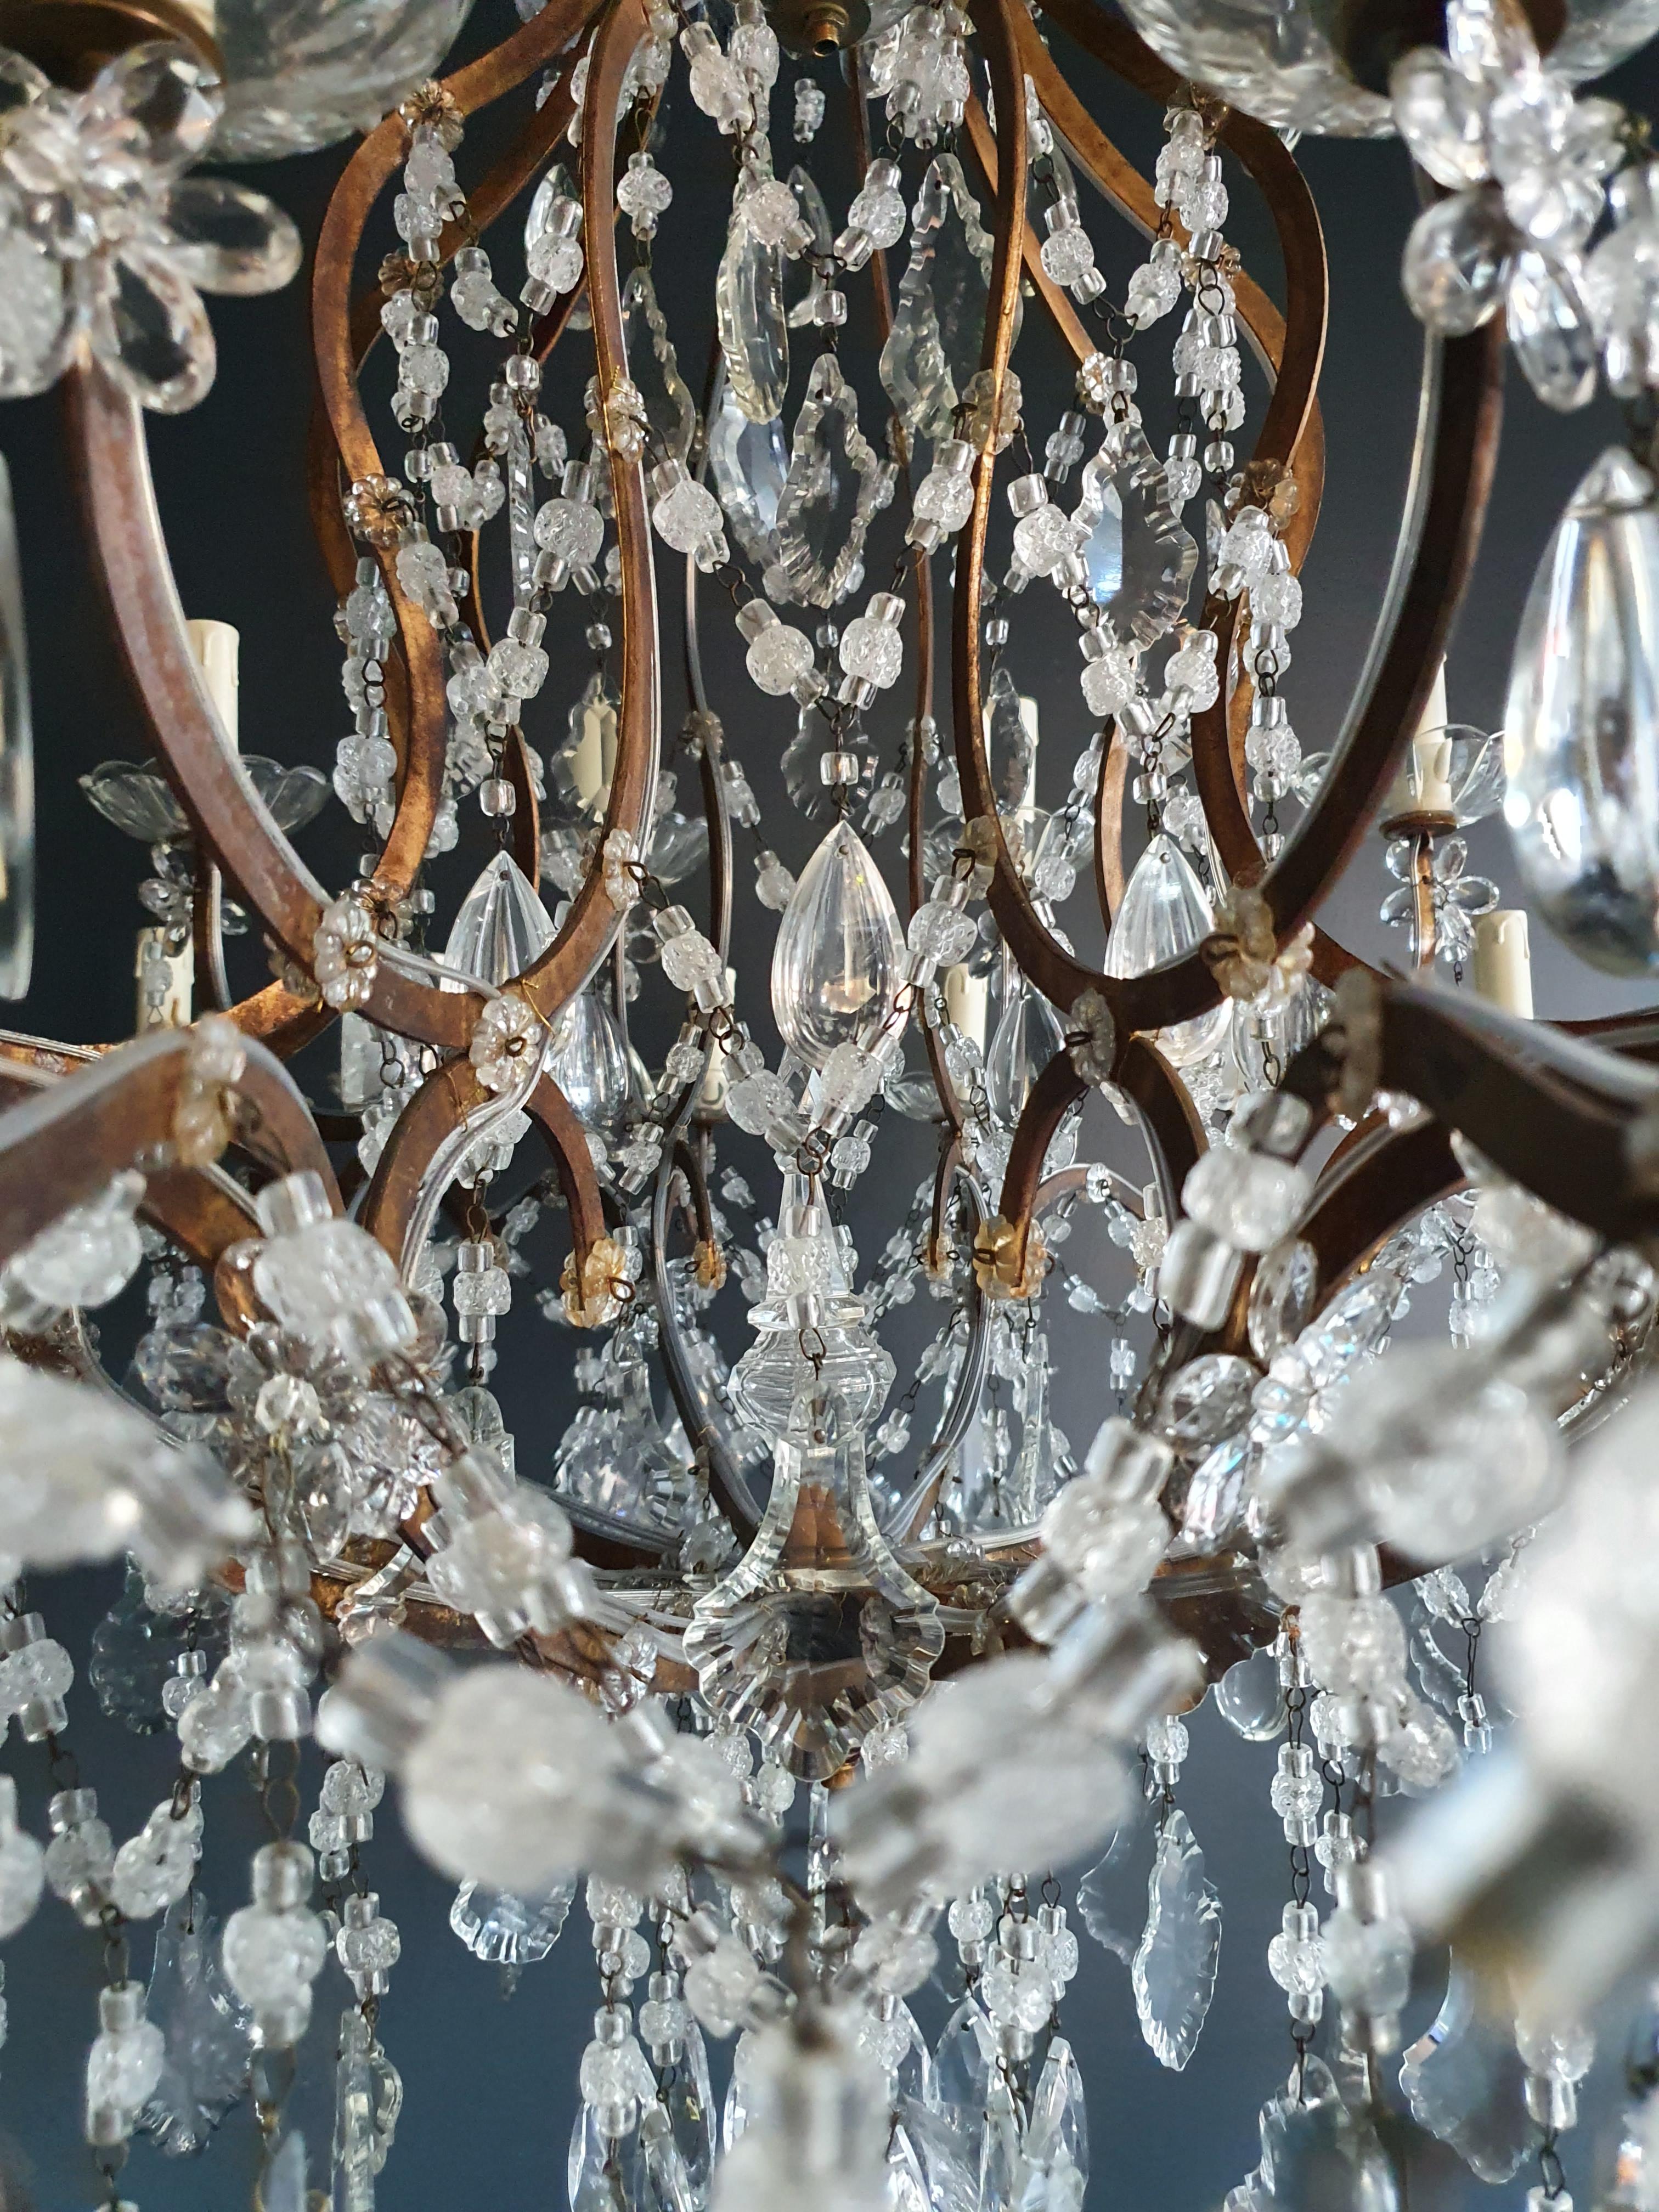 Huge Candelabrum Crystal Antique Chandelier Classic traditional Massive Wide In Good Condition For Sale In Berlin, DE